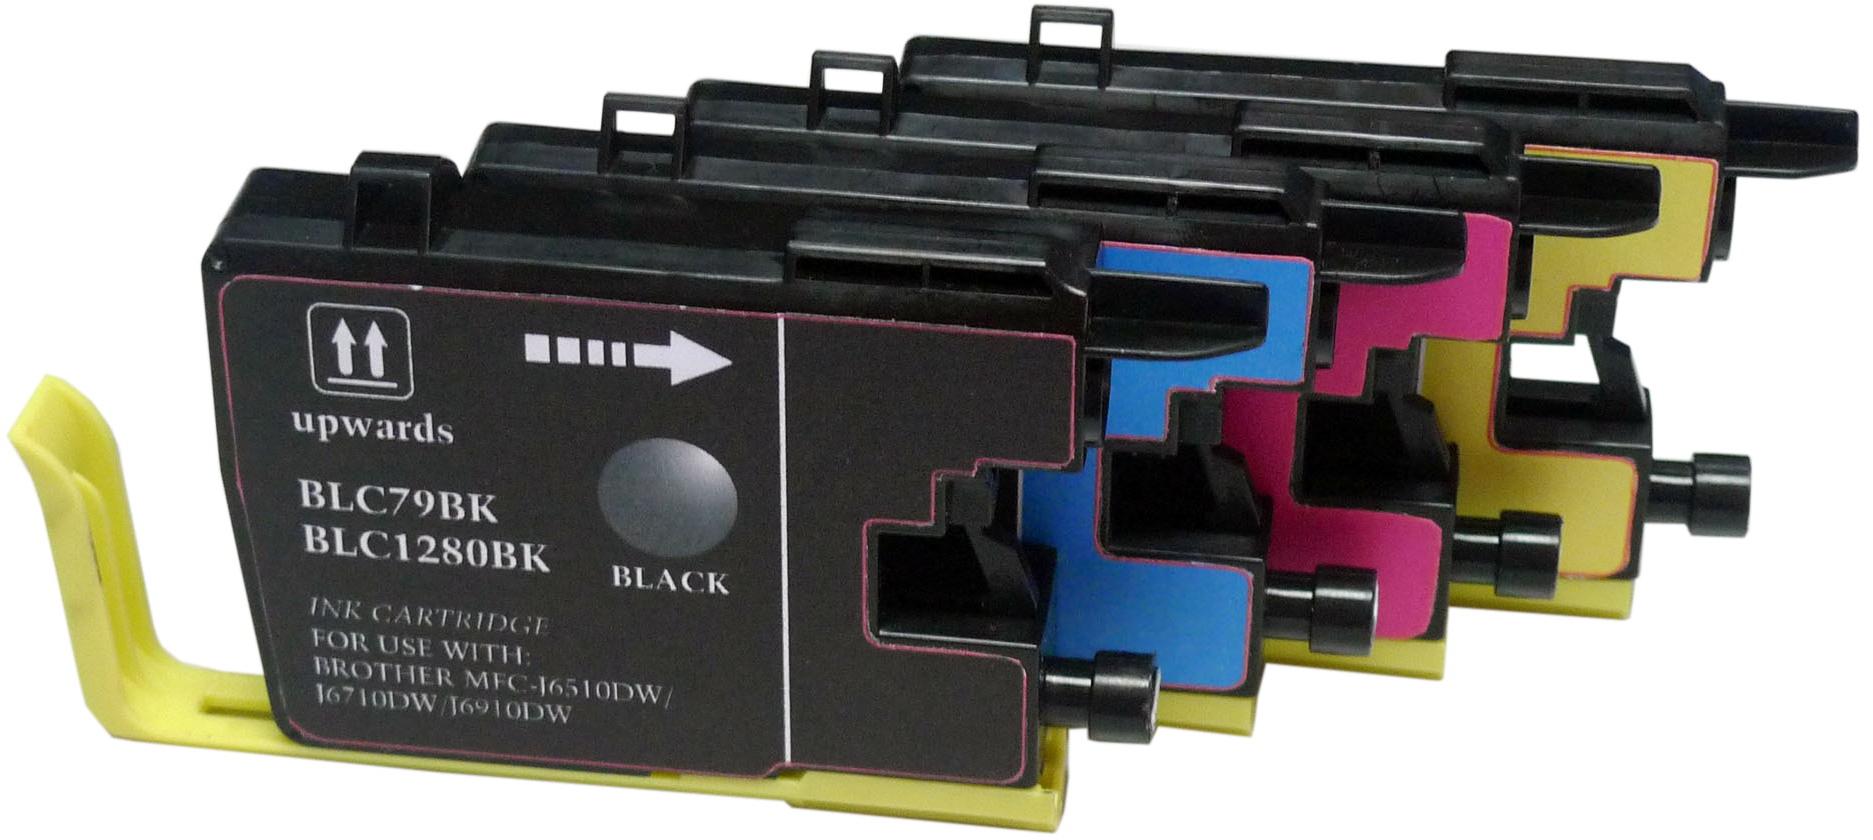 FLWR Brother LC-1280XL Multipack zwart en kleur